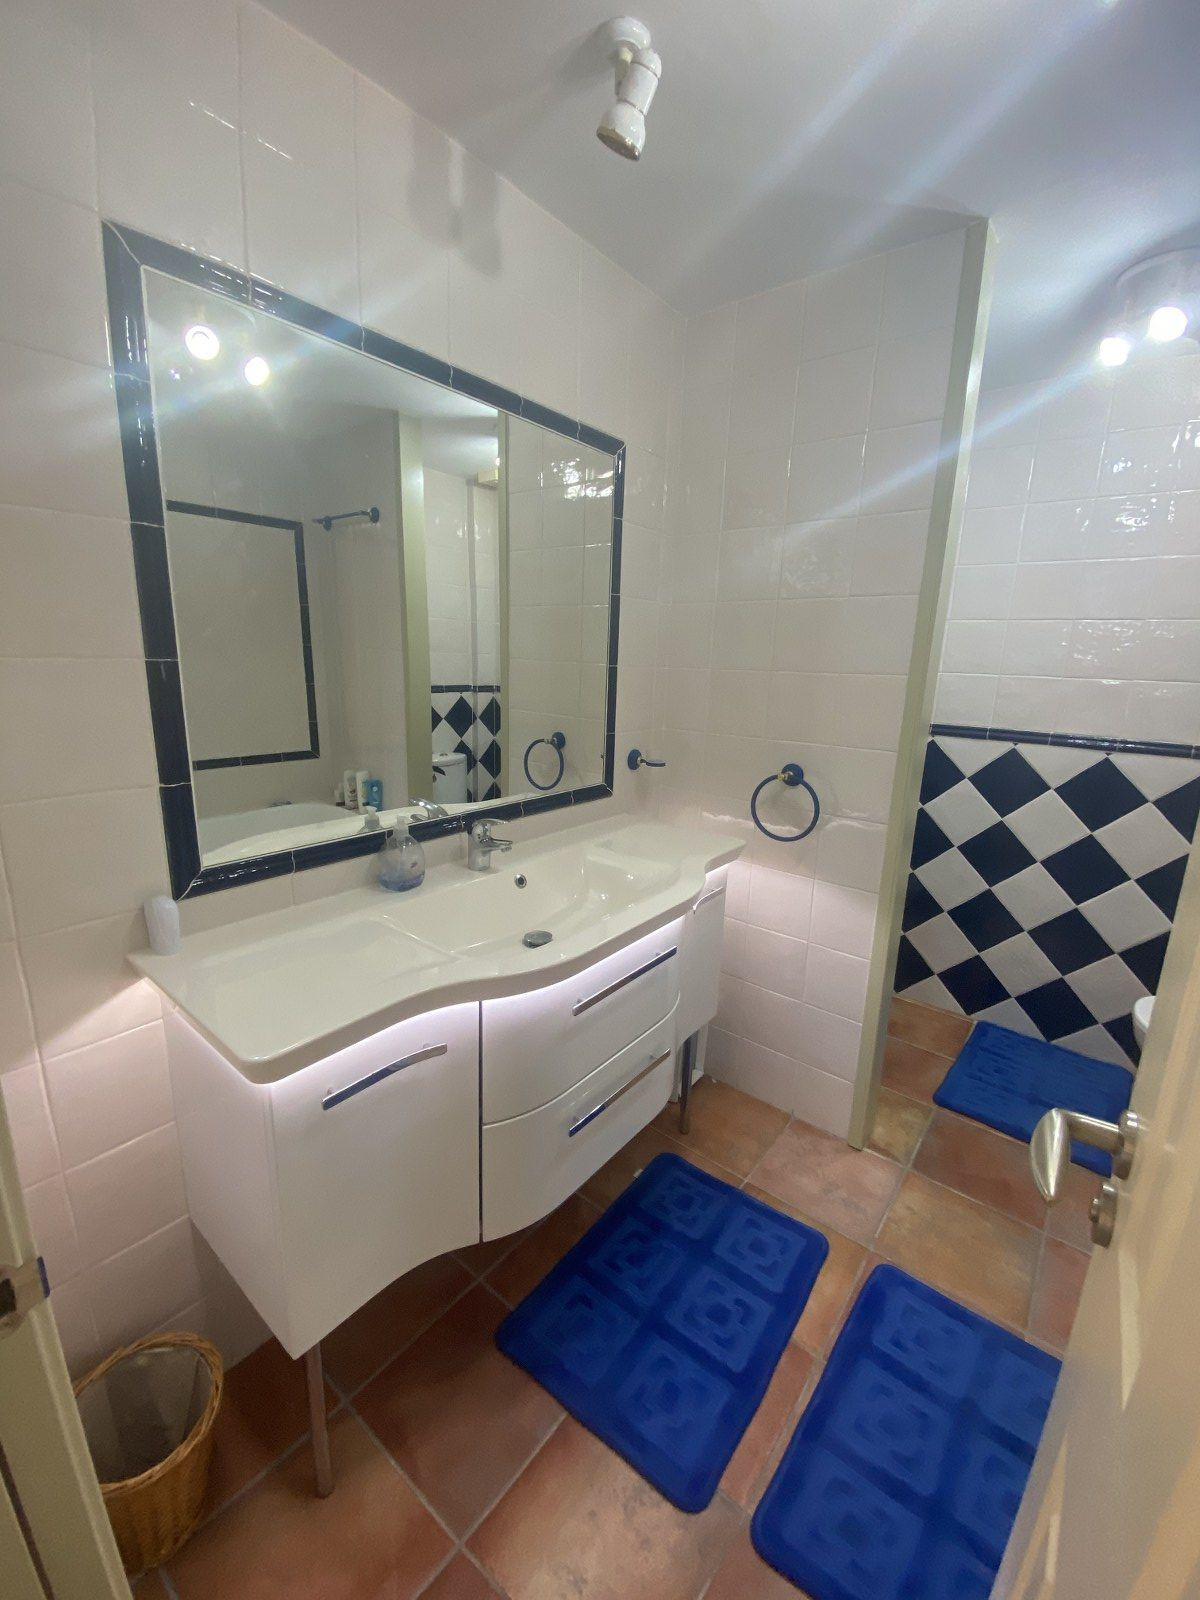 3 bedroom Apartment For Sale in Benalmadena, Málaga - thumb 19